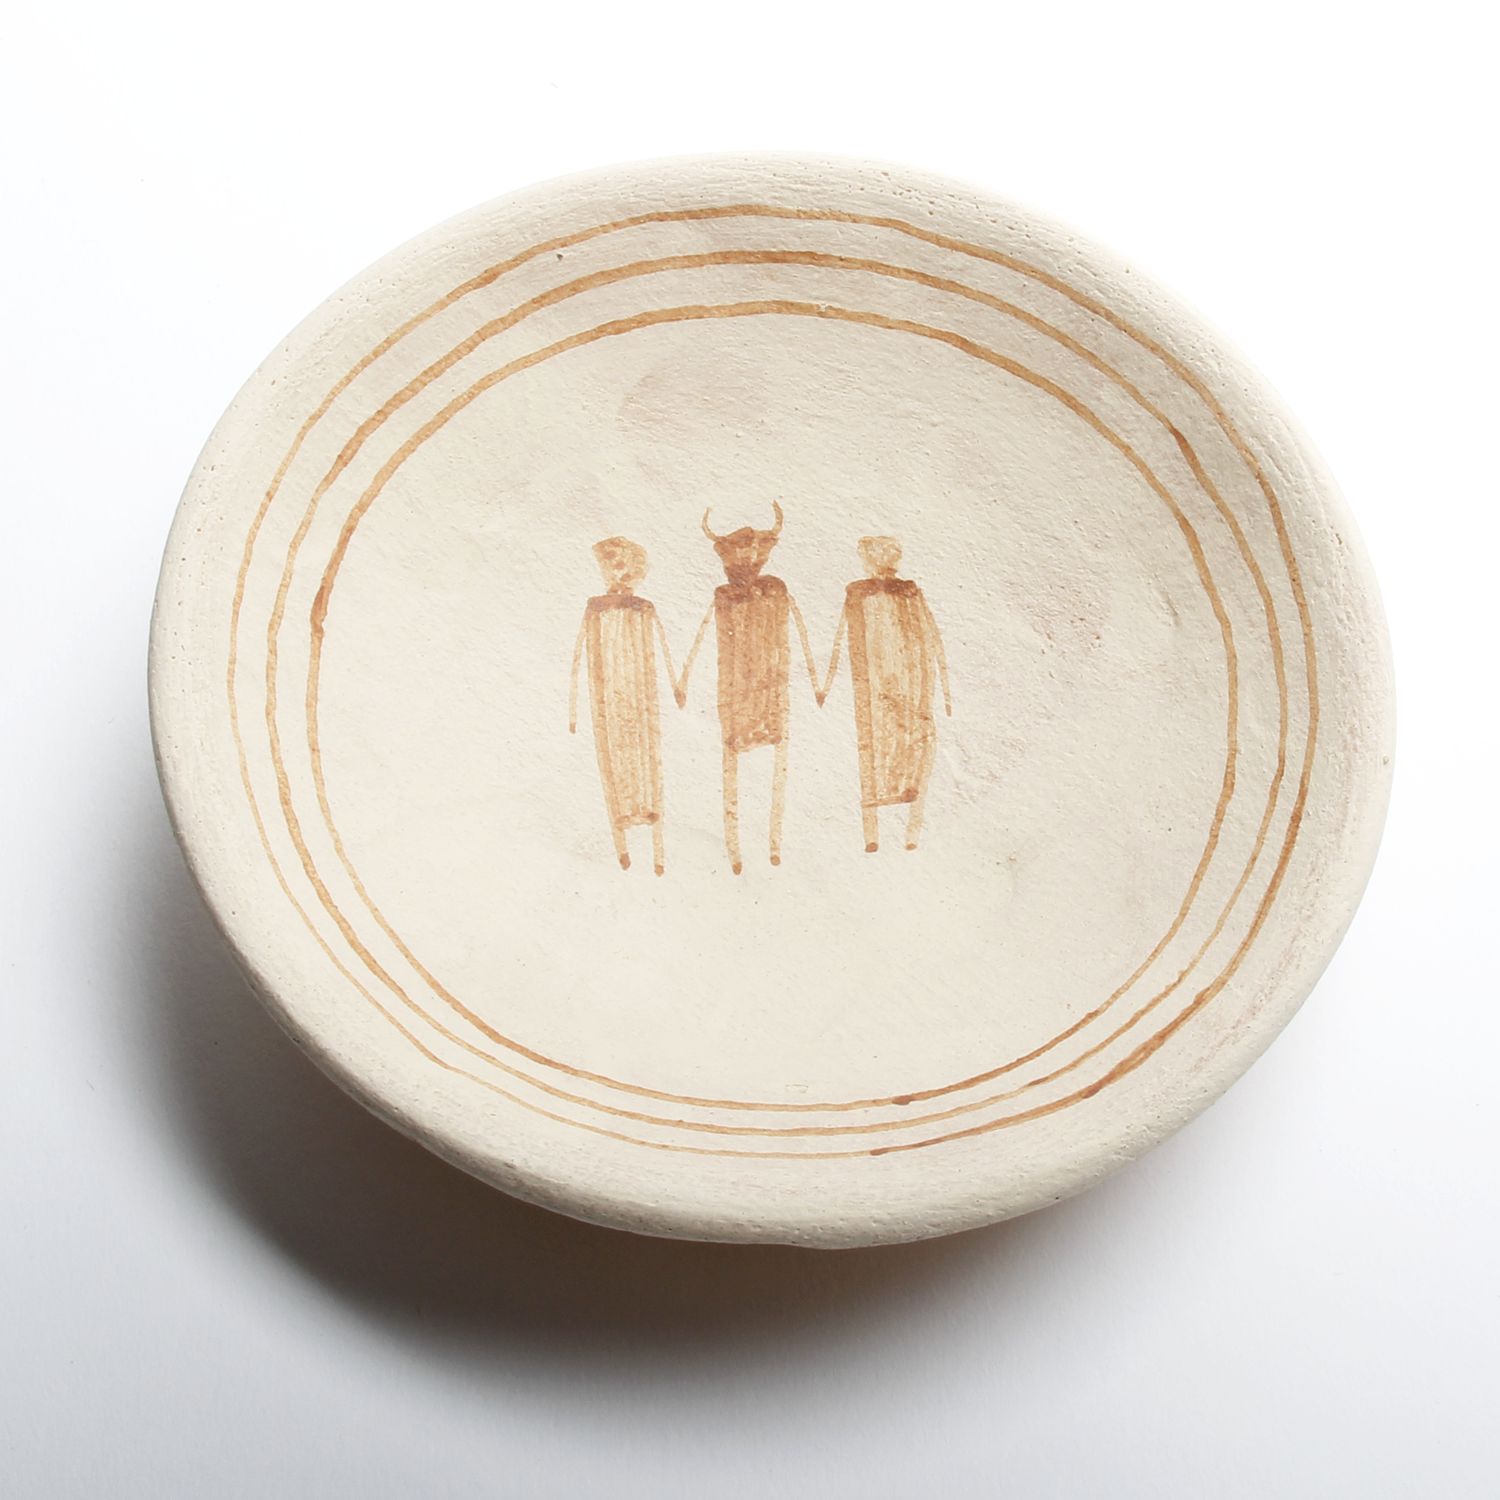 David Migwans: Shawman Family Bowl Product Image 3 of 3